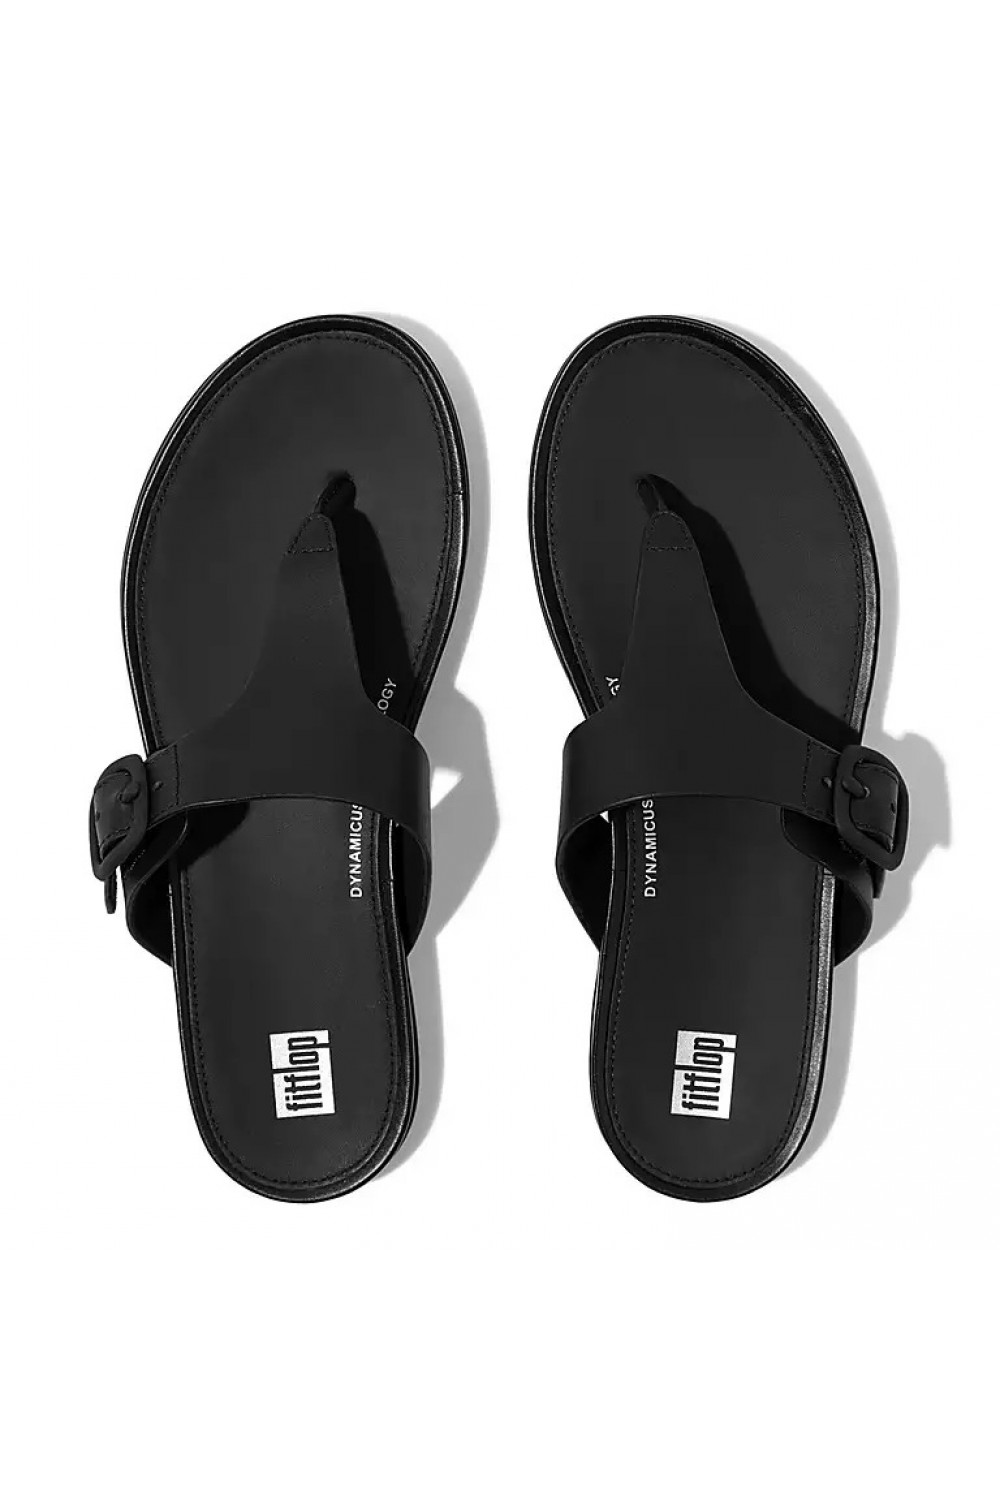 Fitflop Gracie Matt-Buckle Leather Toe-Post Sandals Black